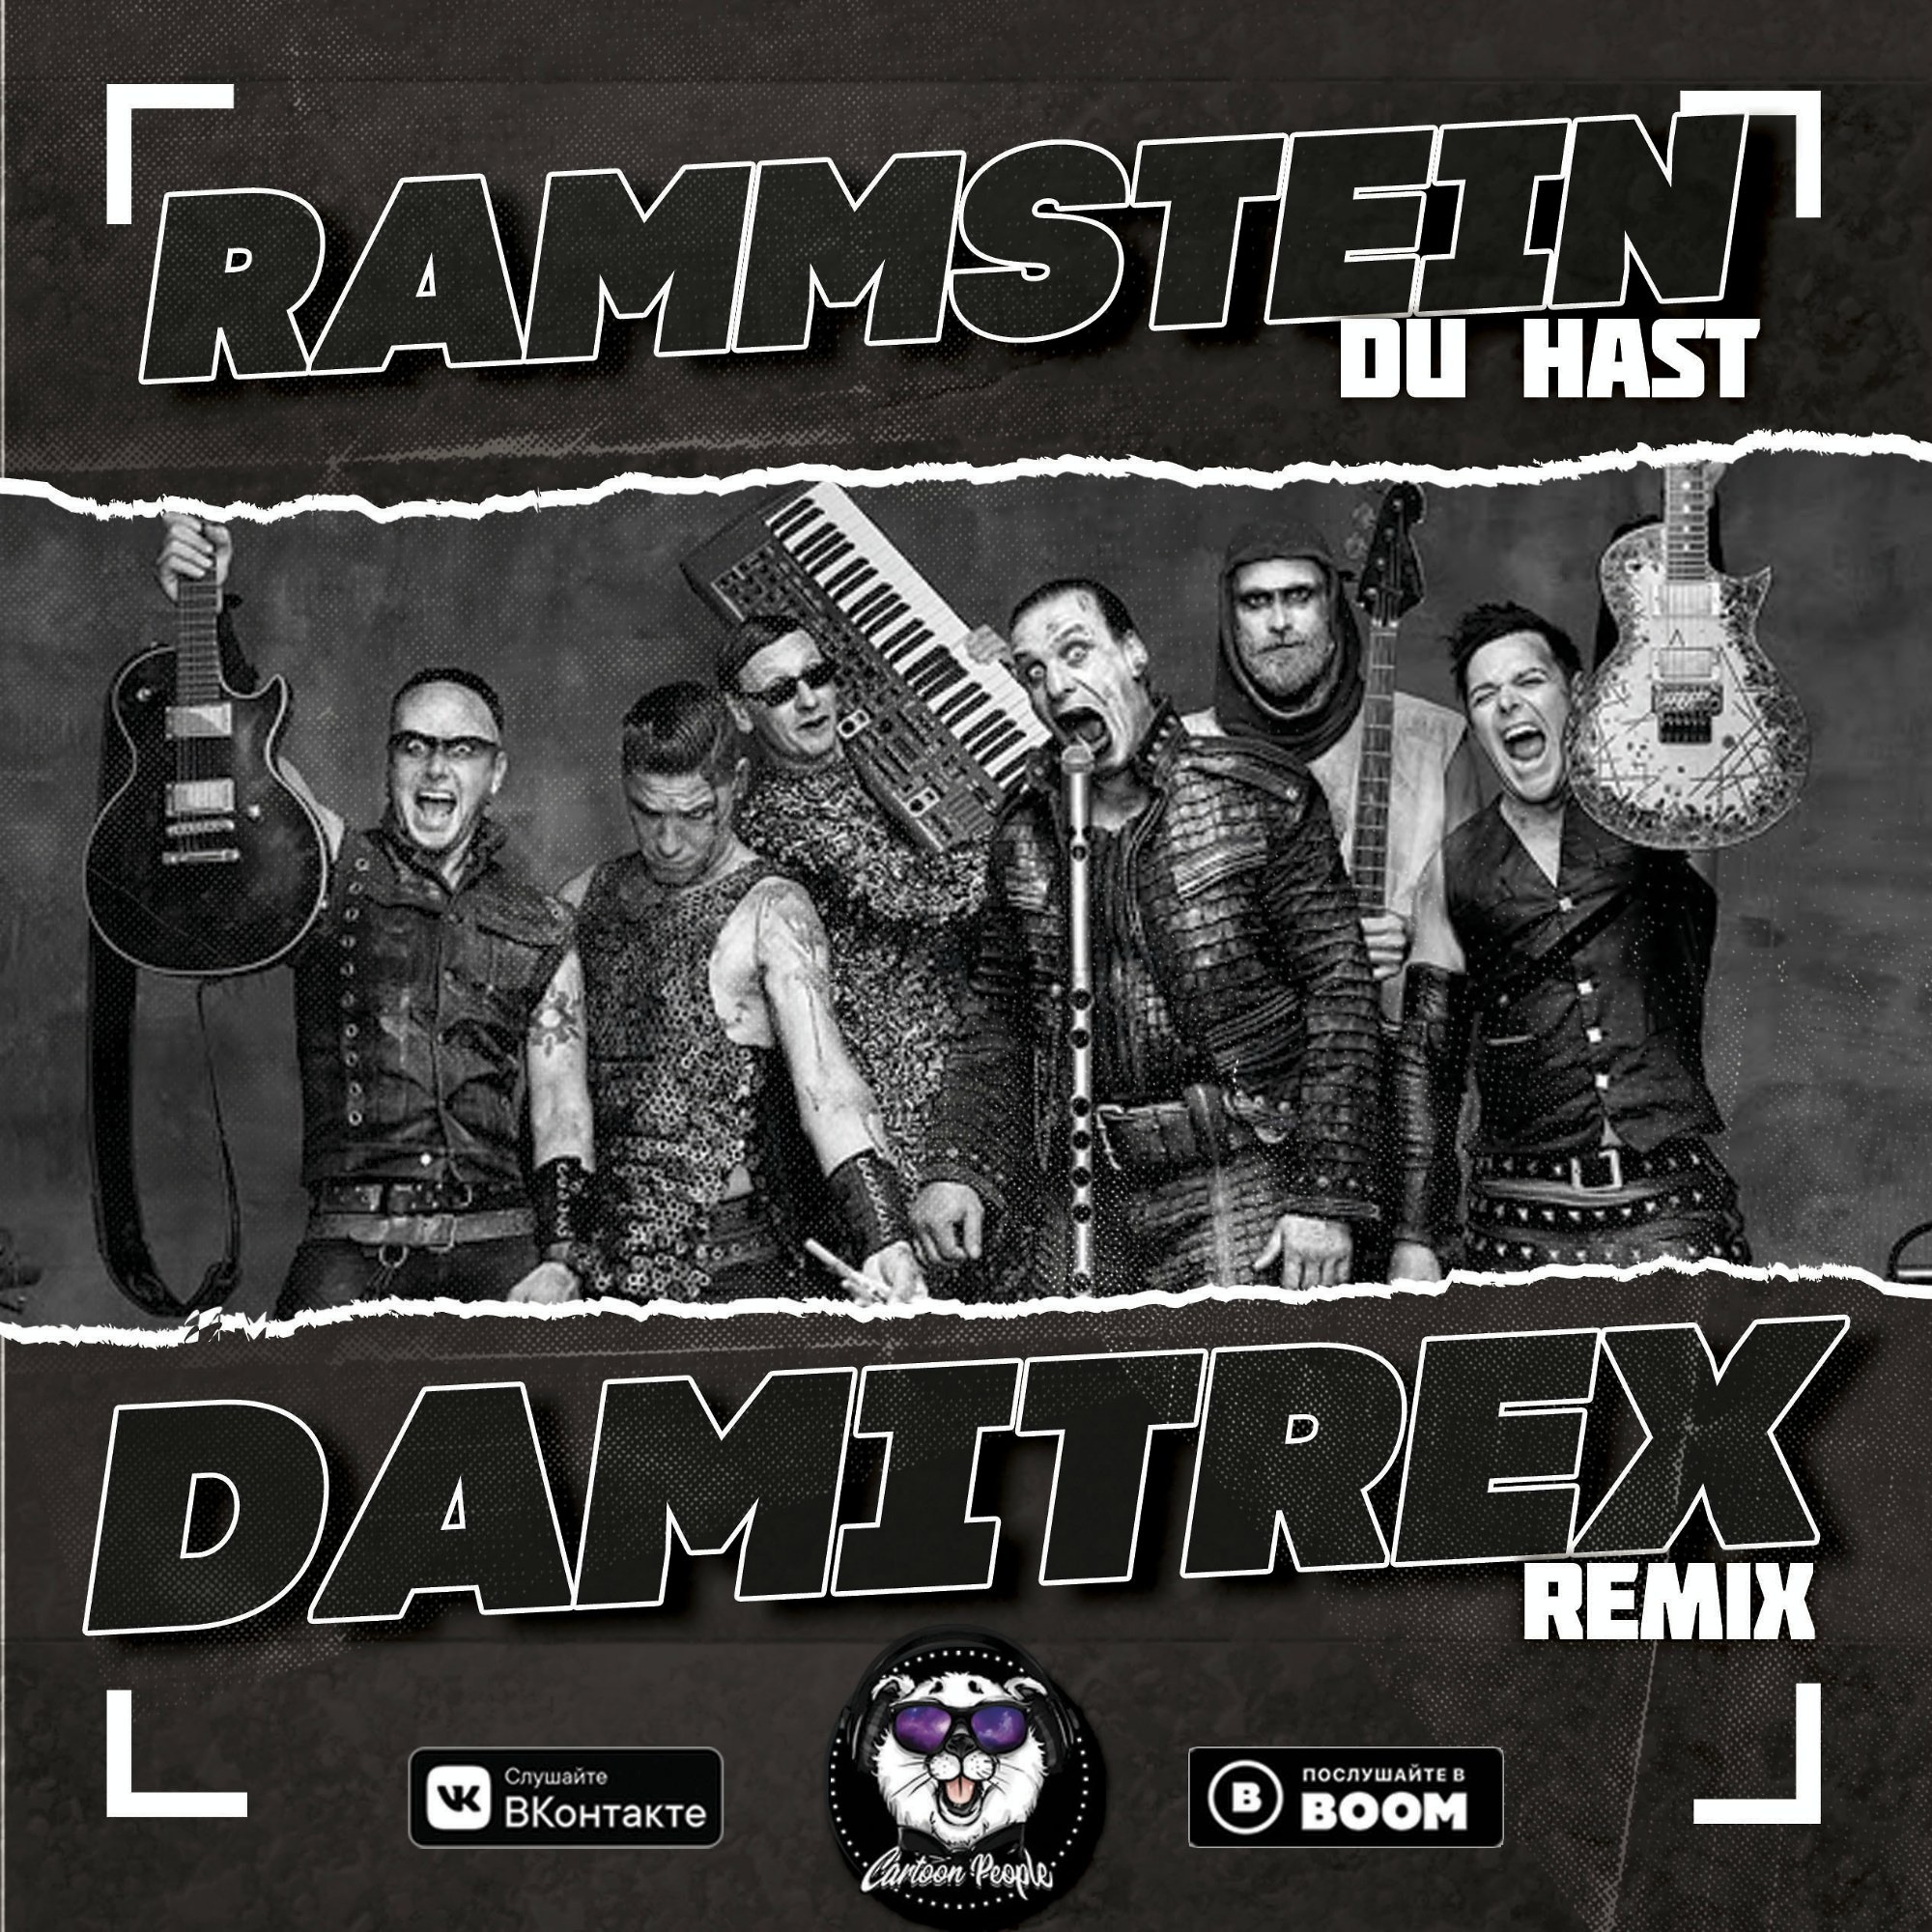 Песня рамштайн в рекламе. Рамштайн ремикс. Рамштайн Remixes. Рамштайн радио. Альбом Rammstein ремиксы.